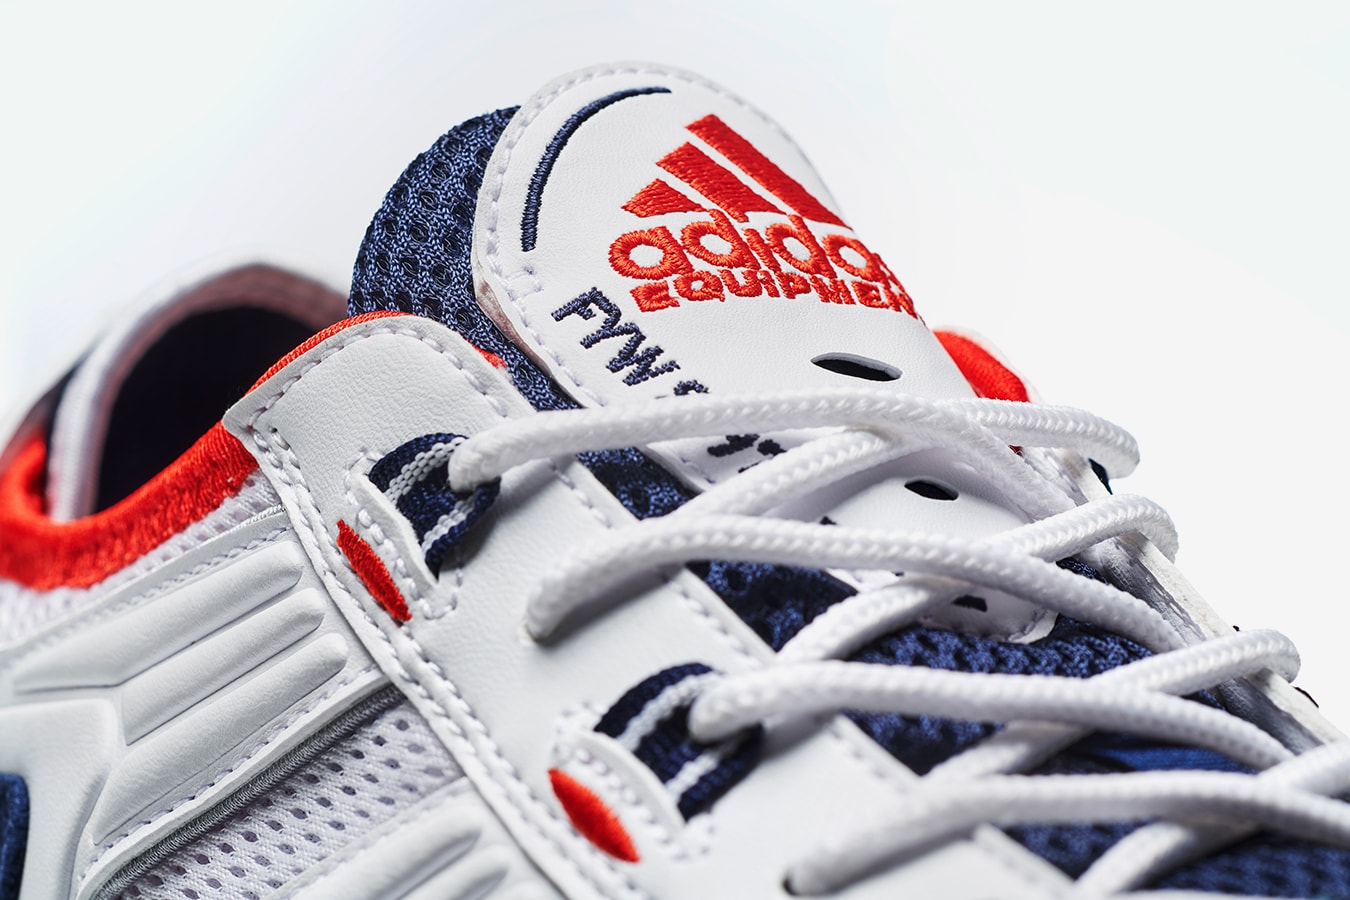 adidas Consortium FYW S-97 torsion sneaker release footwear sneakers shoes kicks 